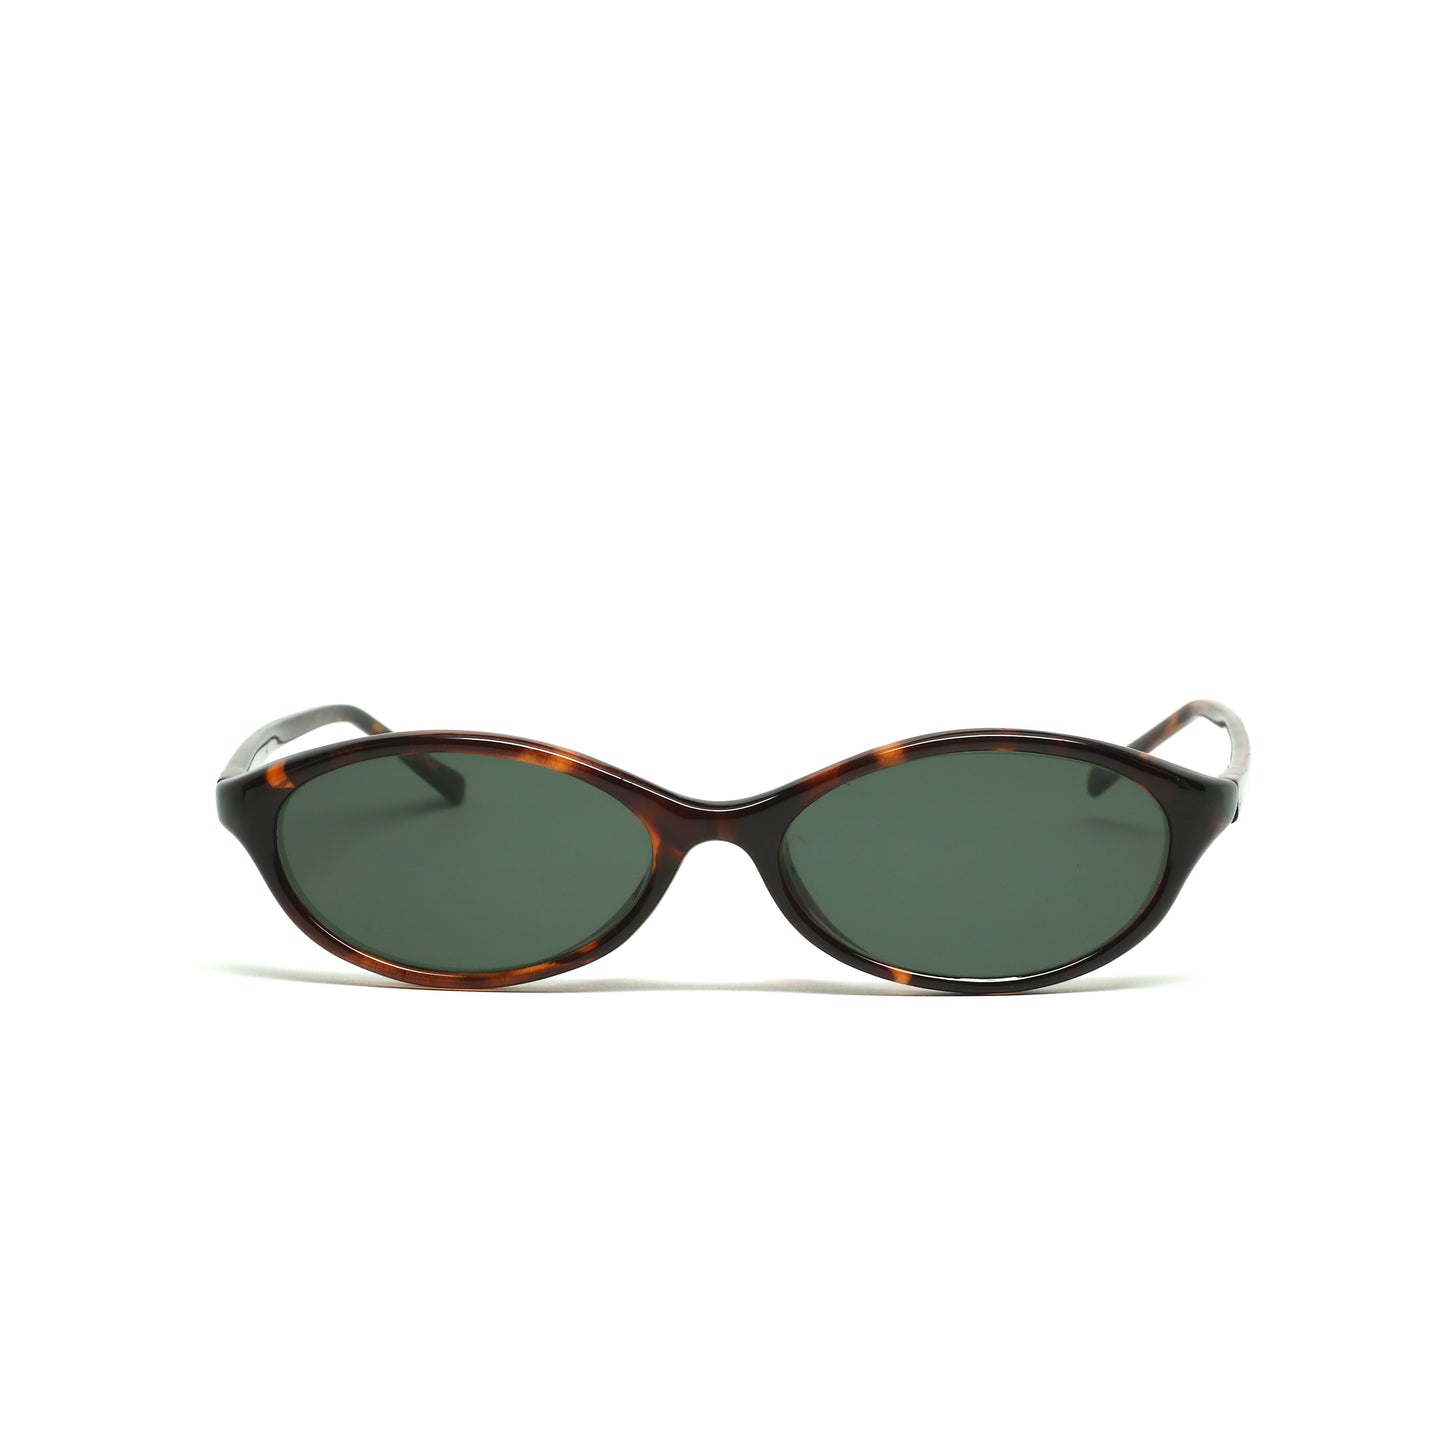 //Style 14// Vintage Late 90s Oval Frame Sunglasses - Tortoise